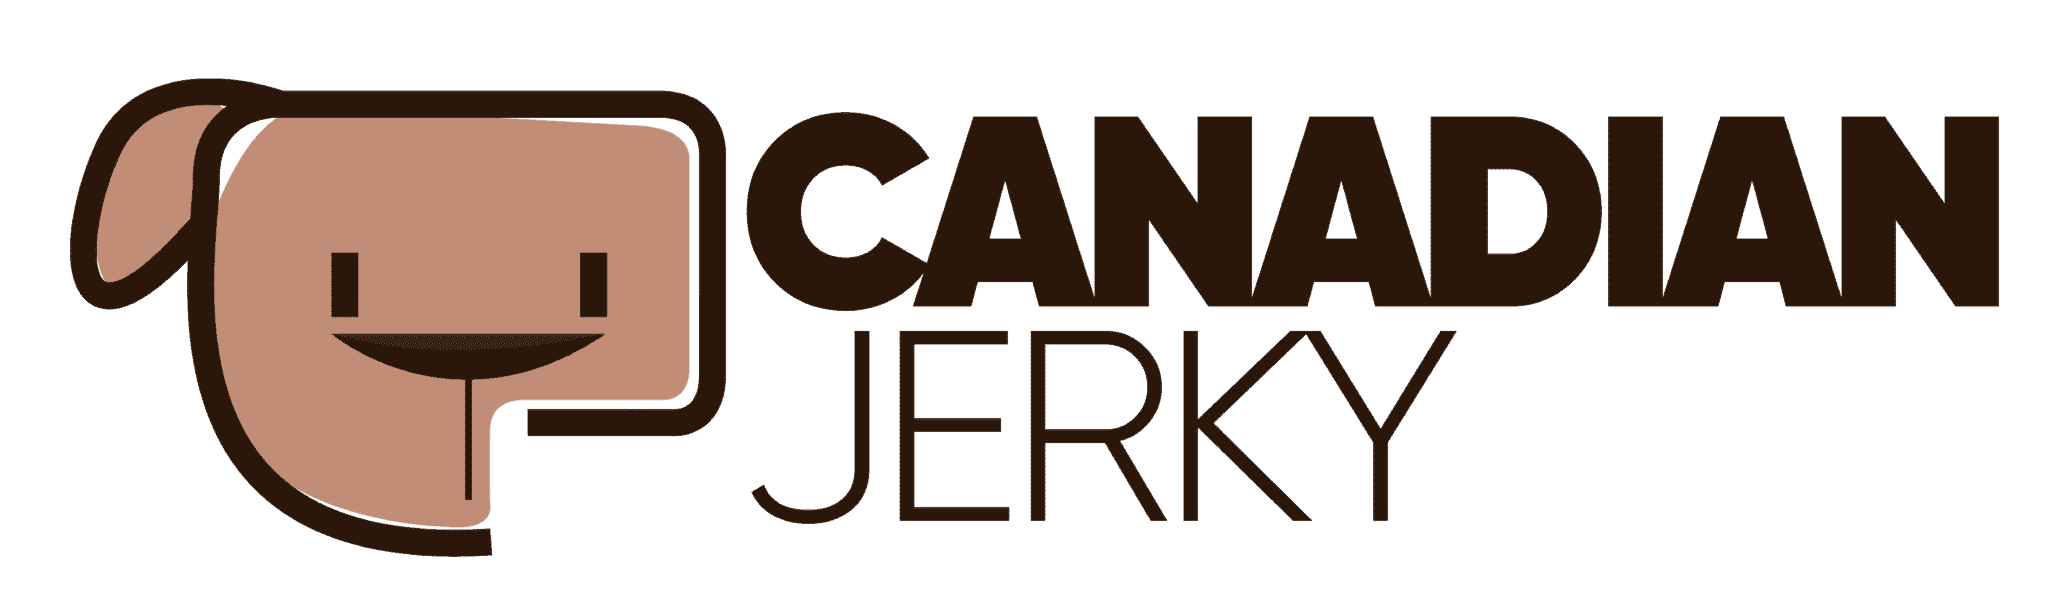 Canadian Jerky Brand Logo